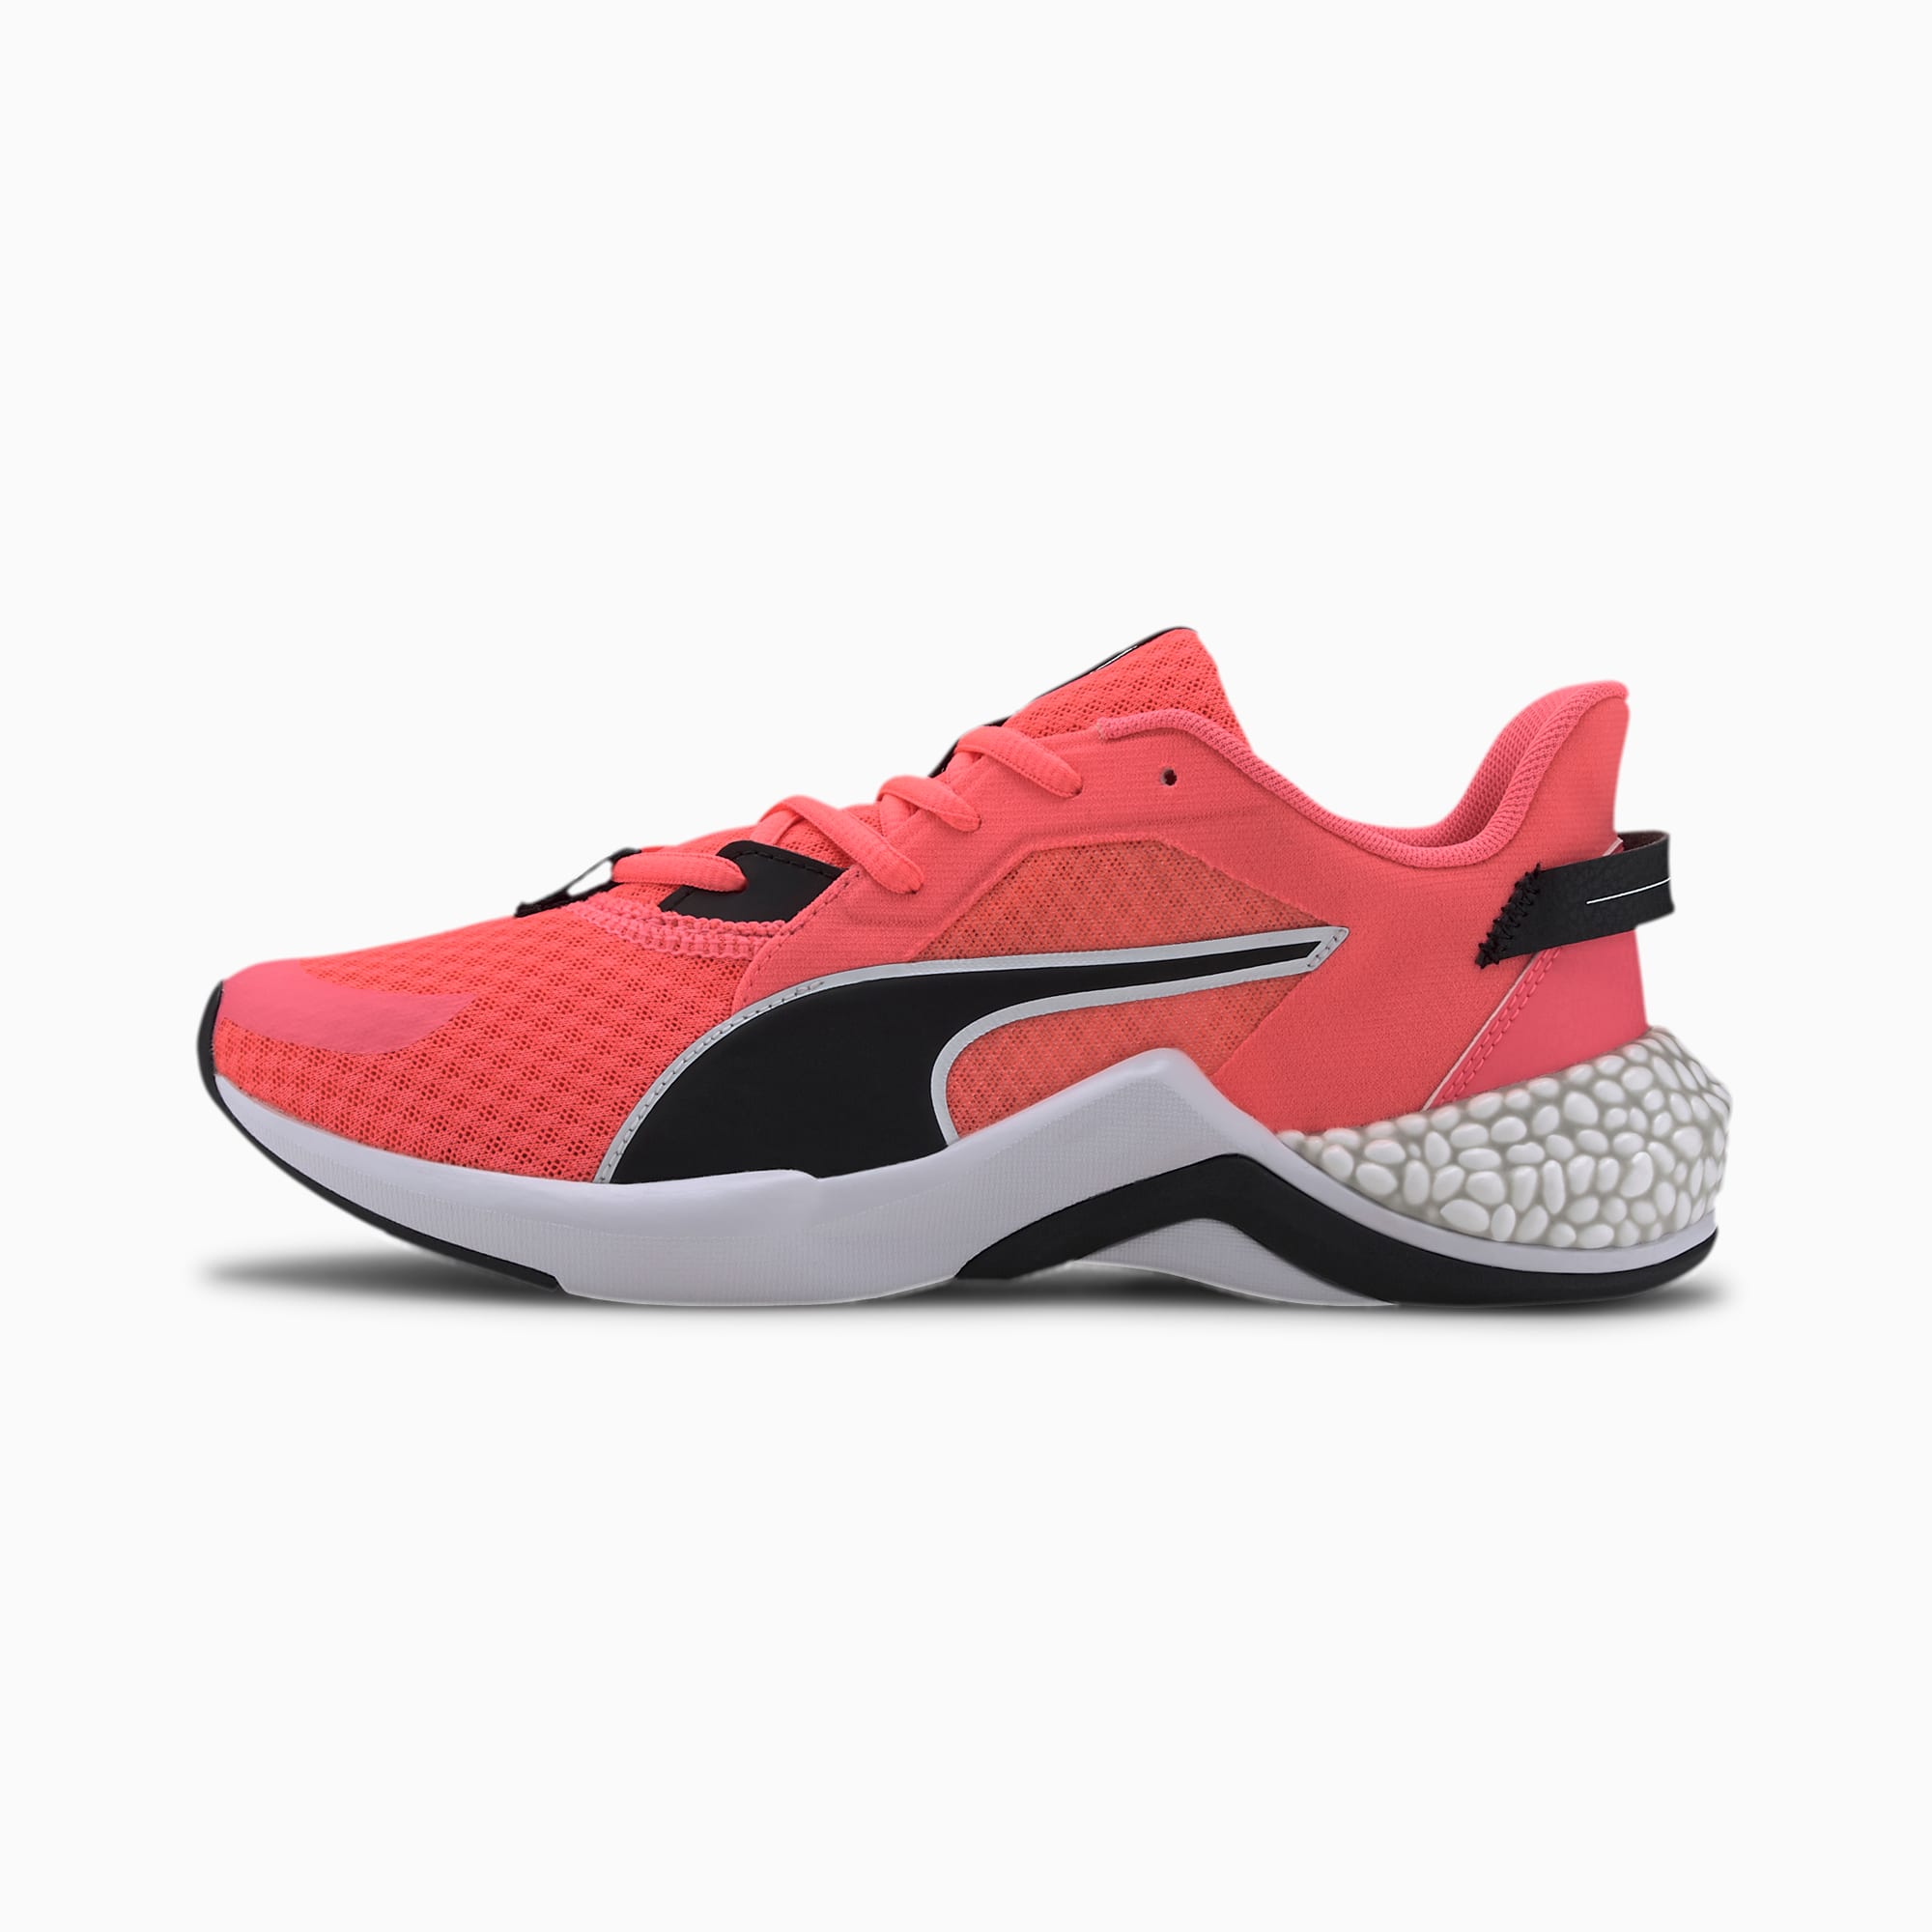 puma running shoes pink